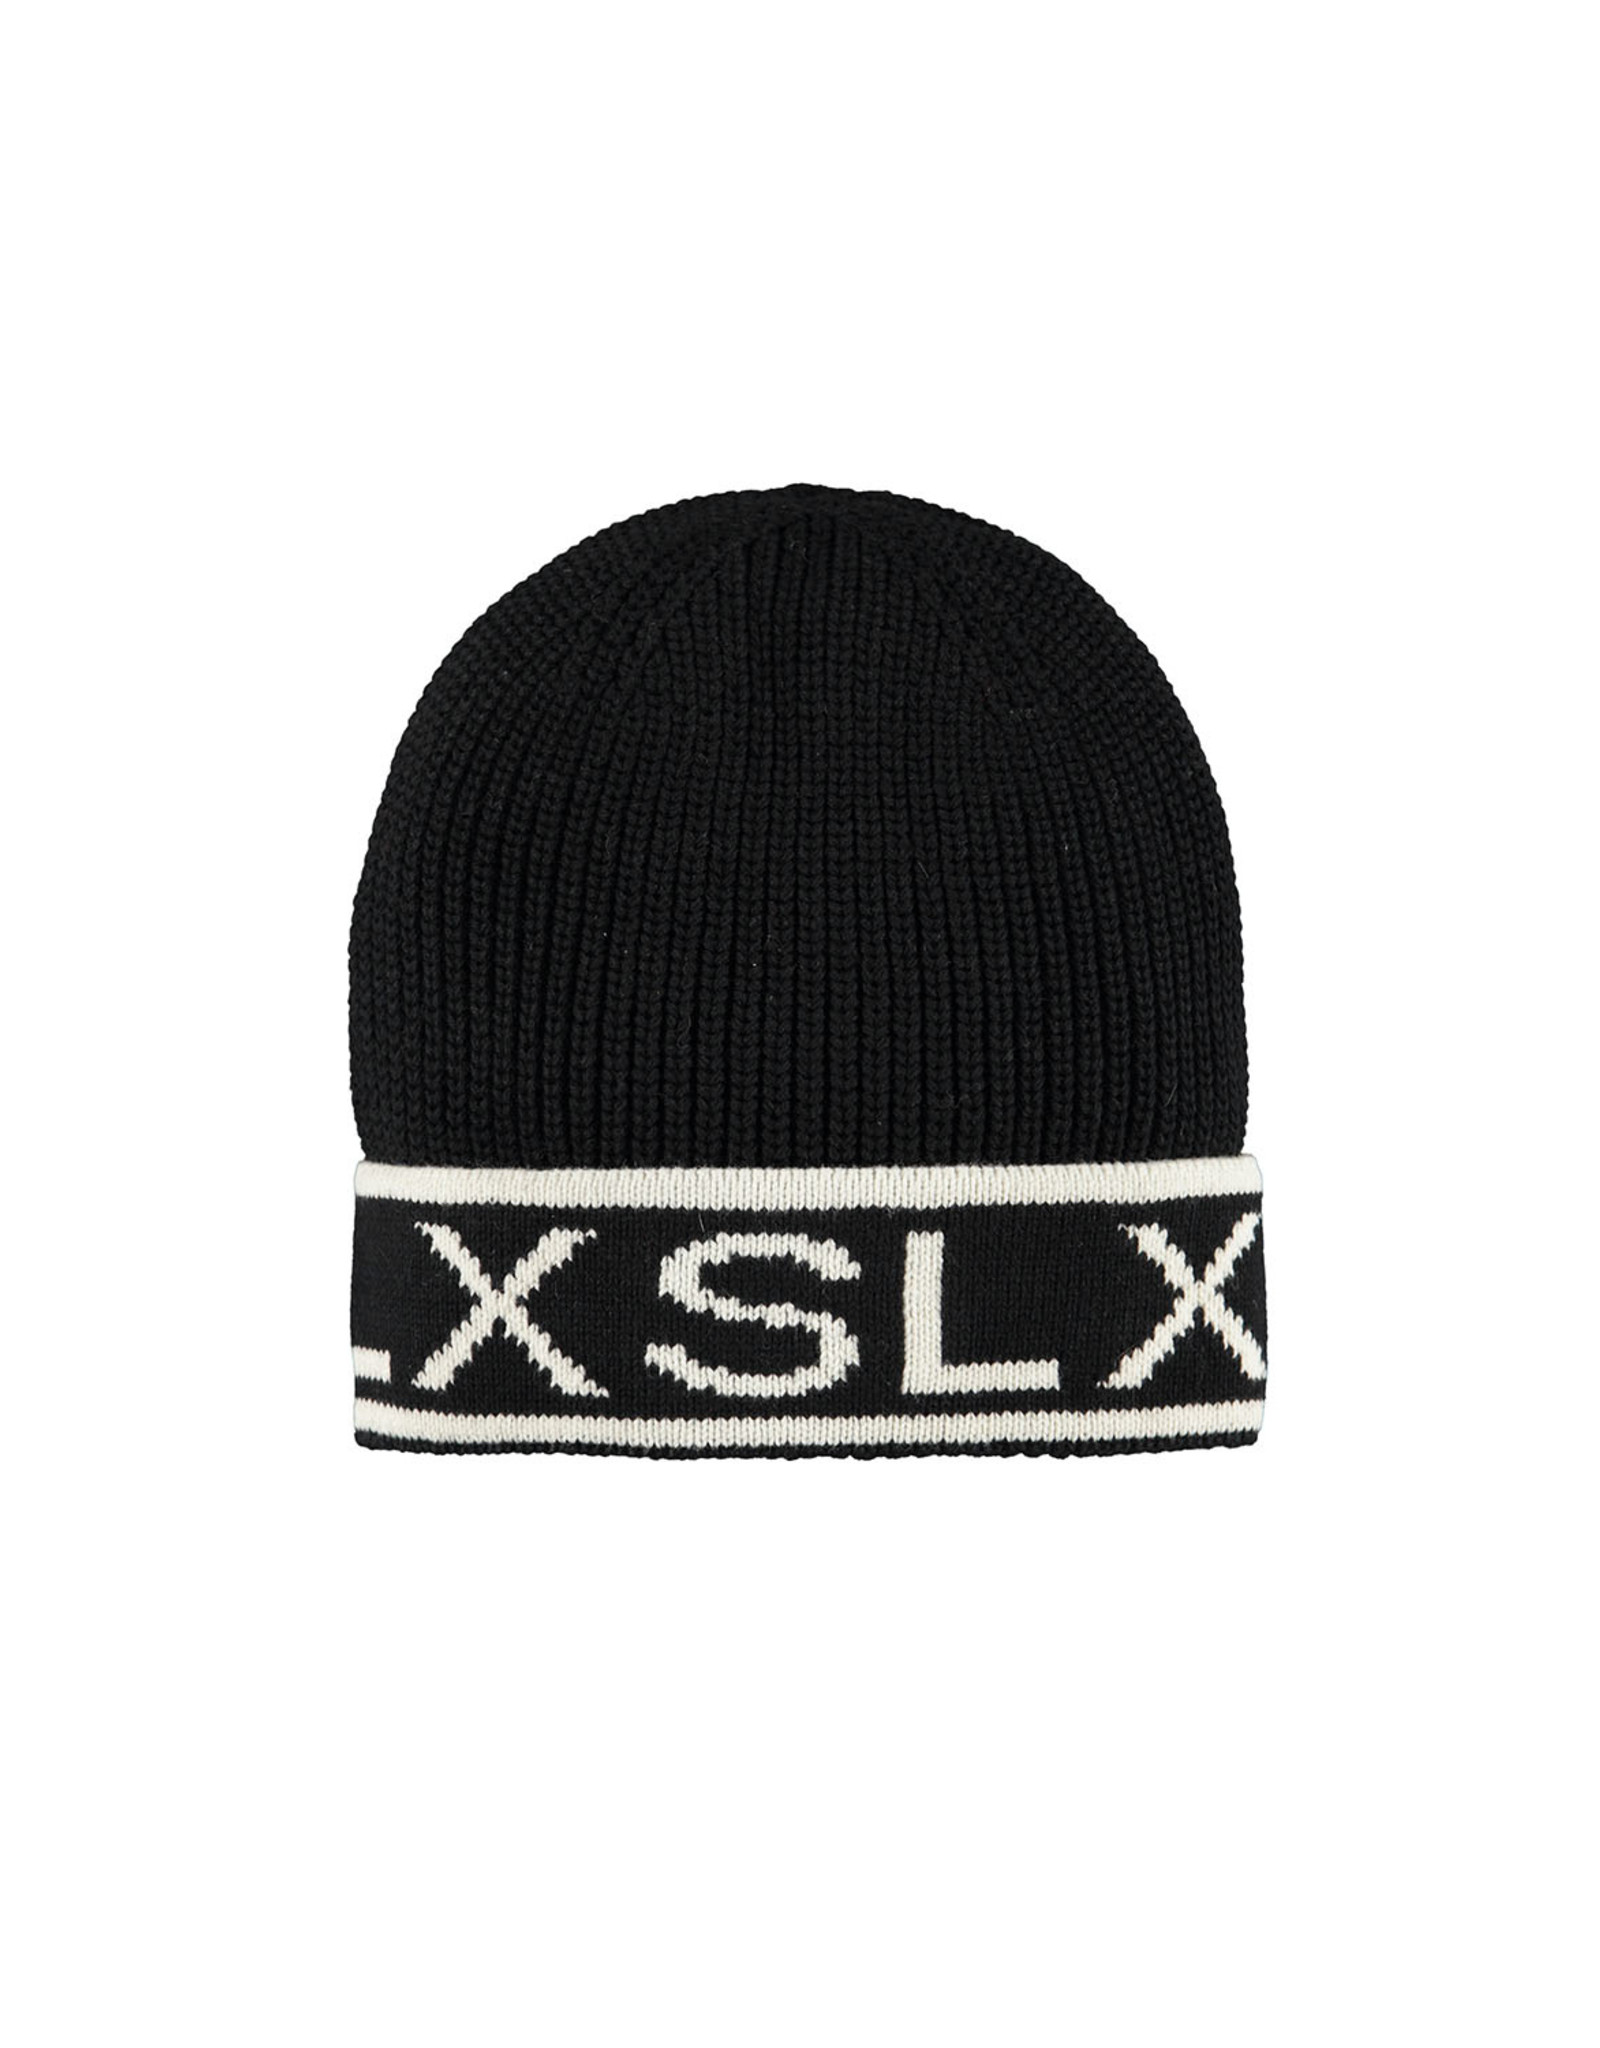 Looxs 10Sixteen knited beanie black